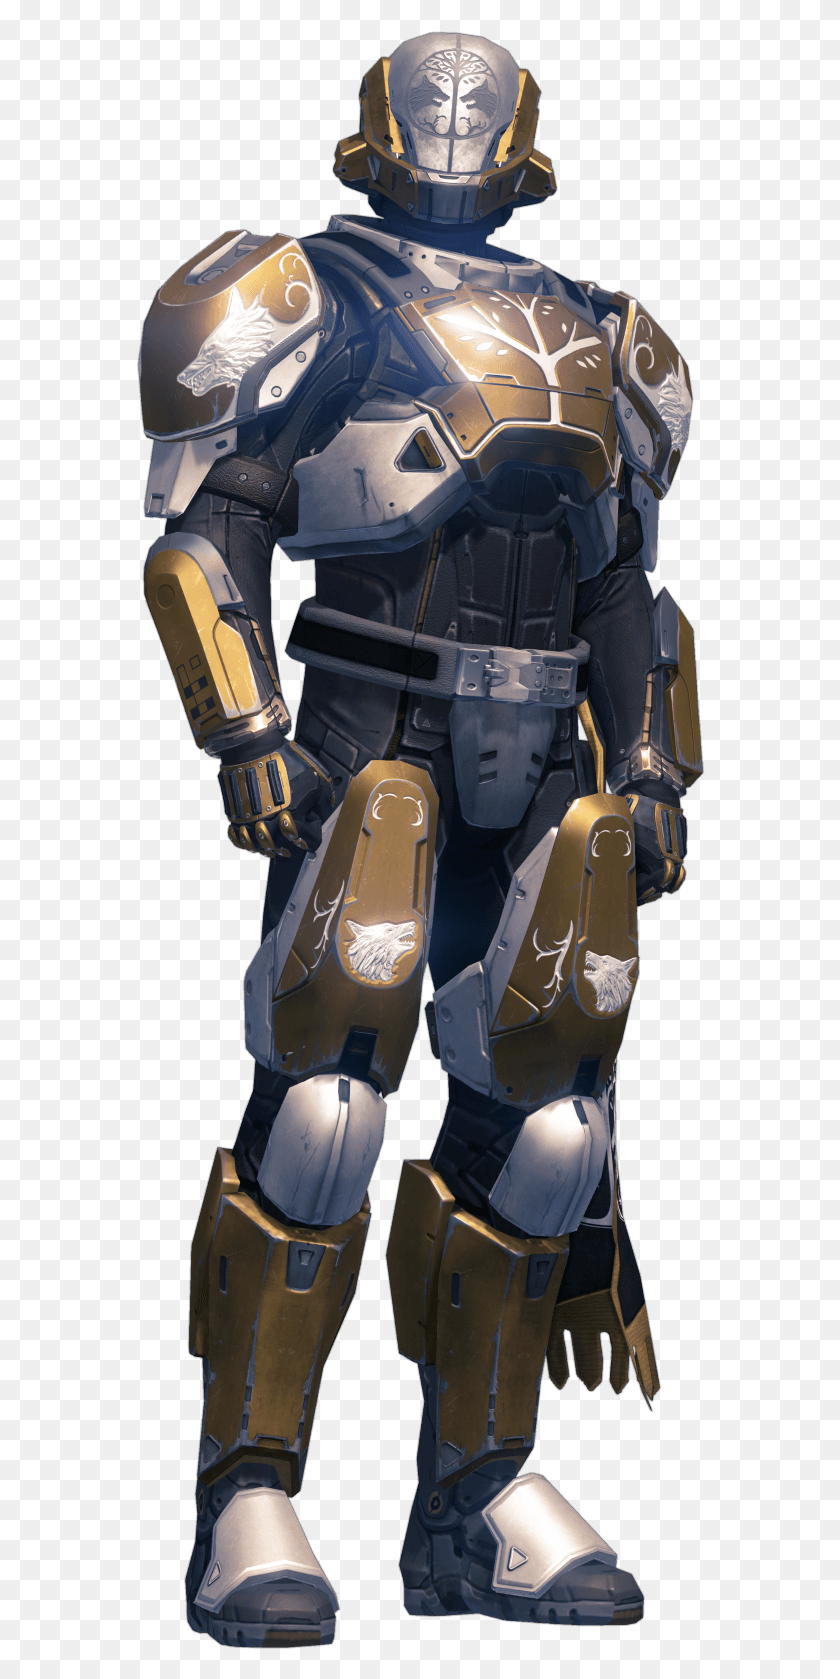 570x1619 Comwp Iron Banner Armor 1 Titan Iron Lord Armor, Шлем, Одежда, Одежда Hd Png Скачать